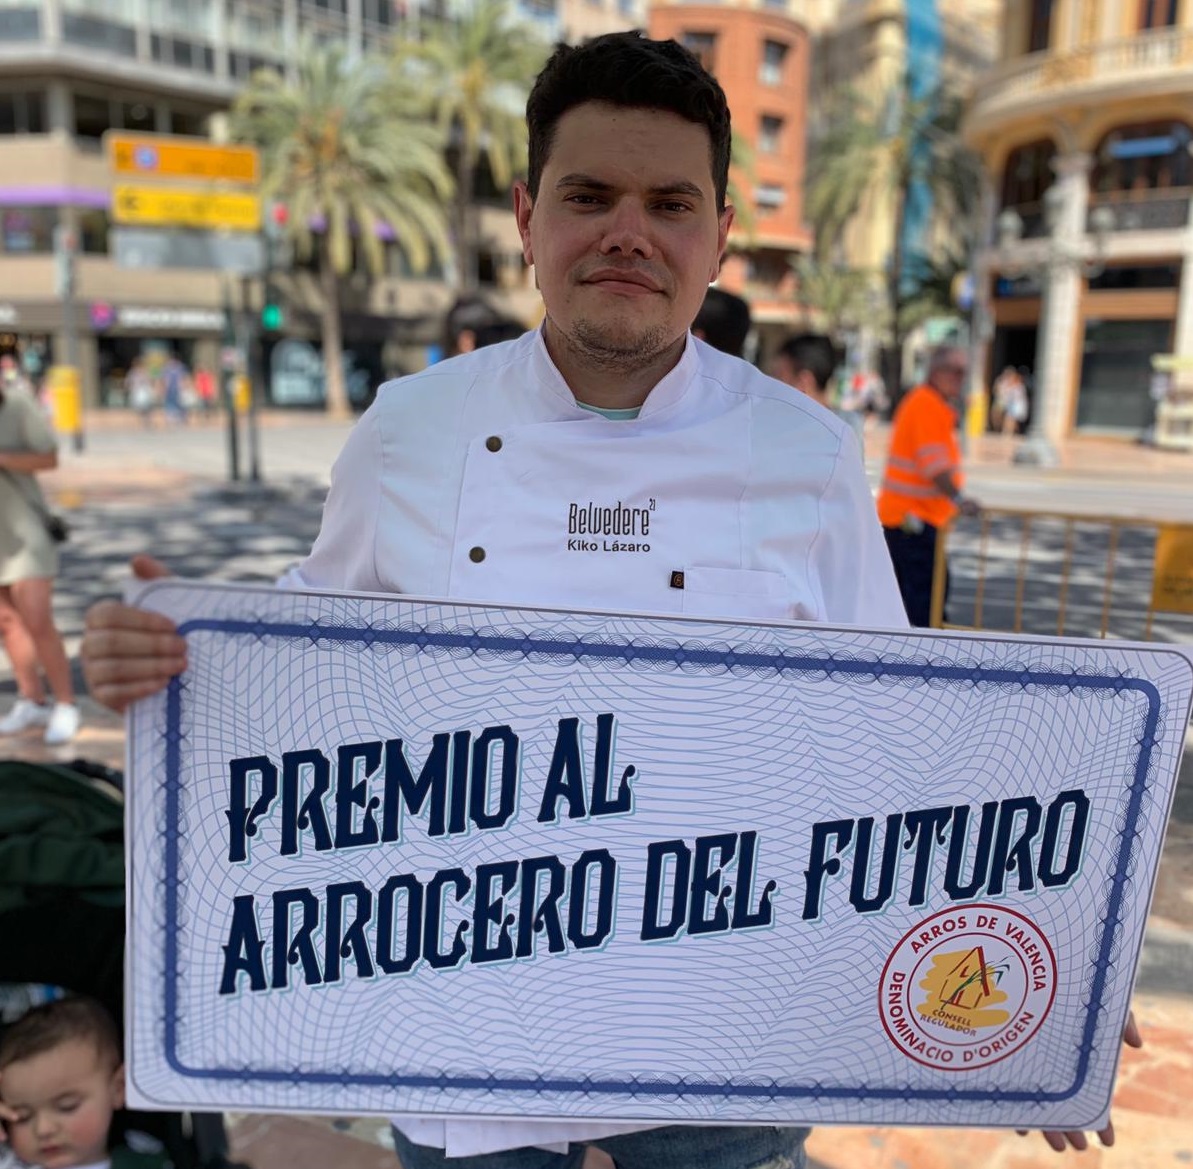 Kiko Lázaro Named “Rice Chef Of The Future” By The Arroz De Valencia Designation Of Origin